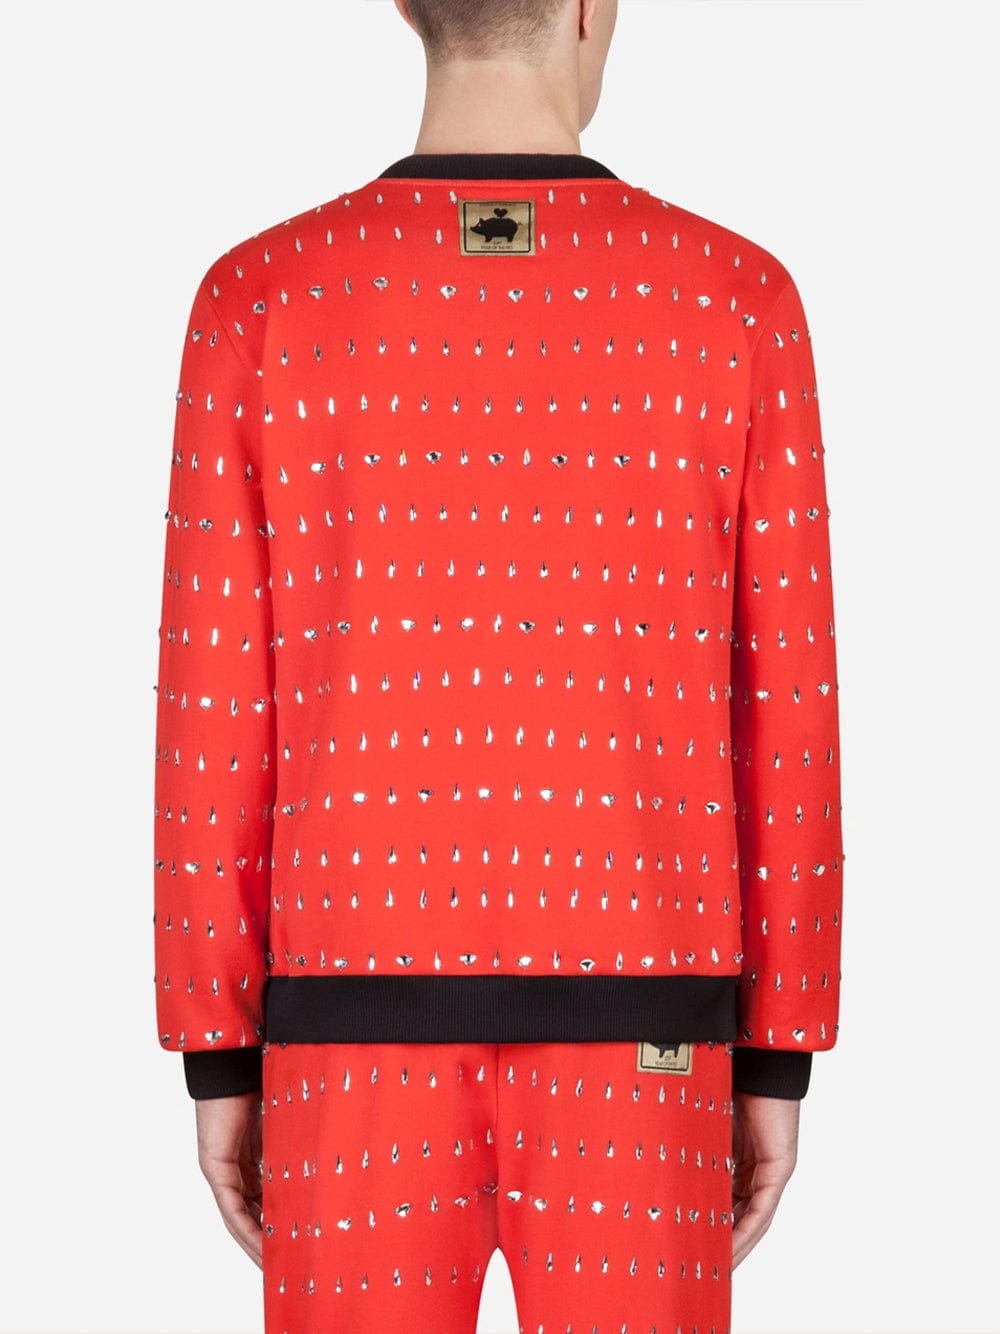 Dolce & Gabbana Swarovski Pig Embellished Sweater